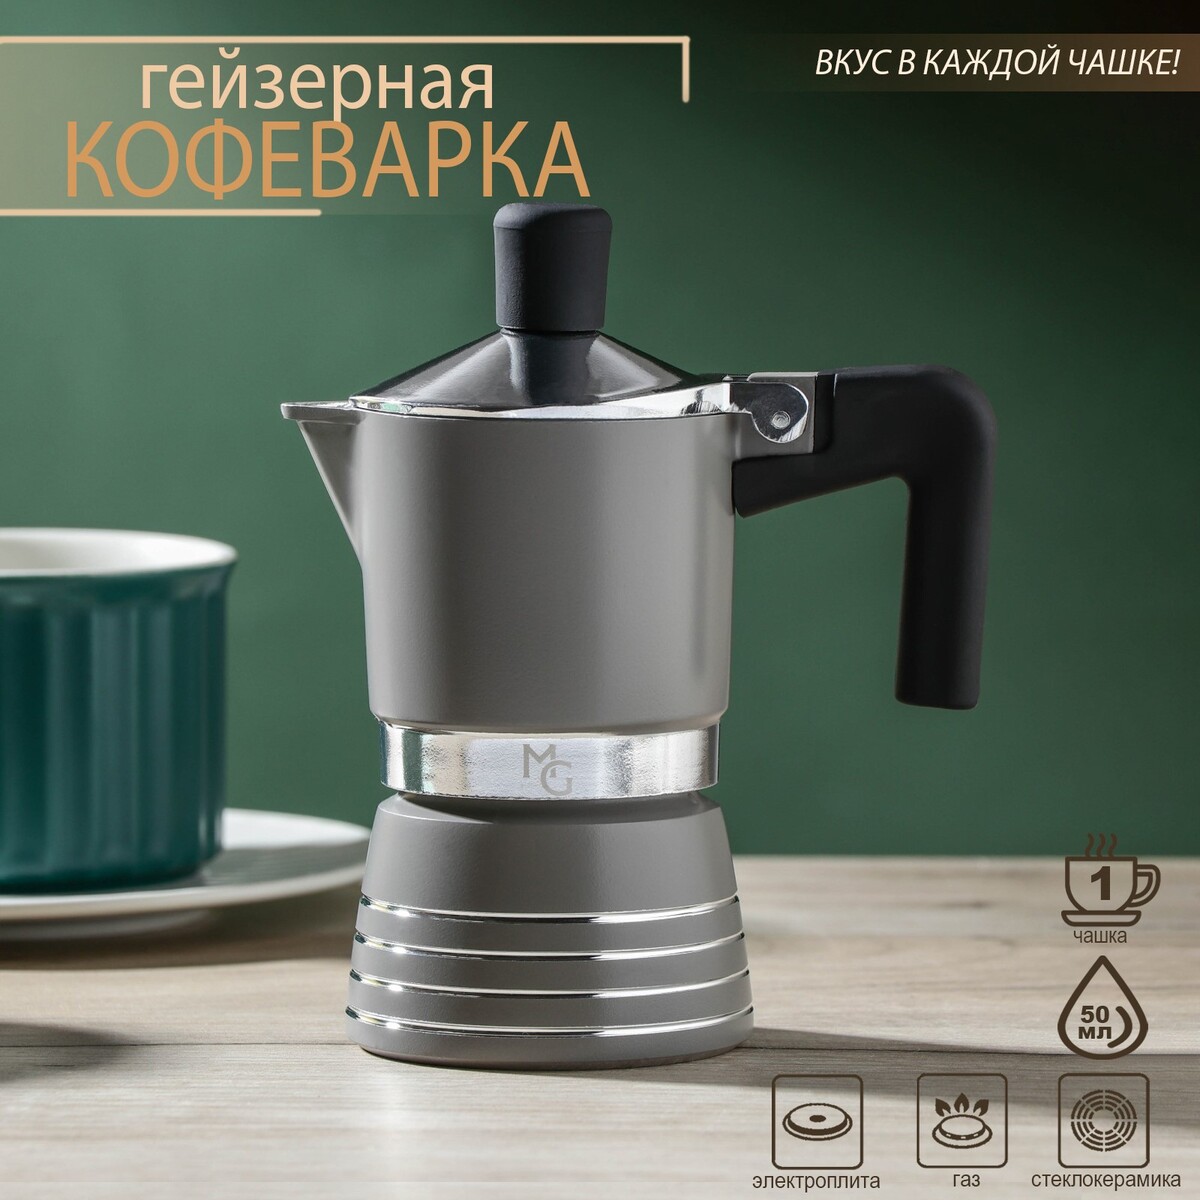 Кофеварка гейзерная magistro moka, на 1 чашку, 50 мл кофеварка гейзерная magistro moka на 6 чашек 300 мл